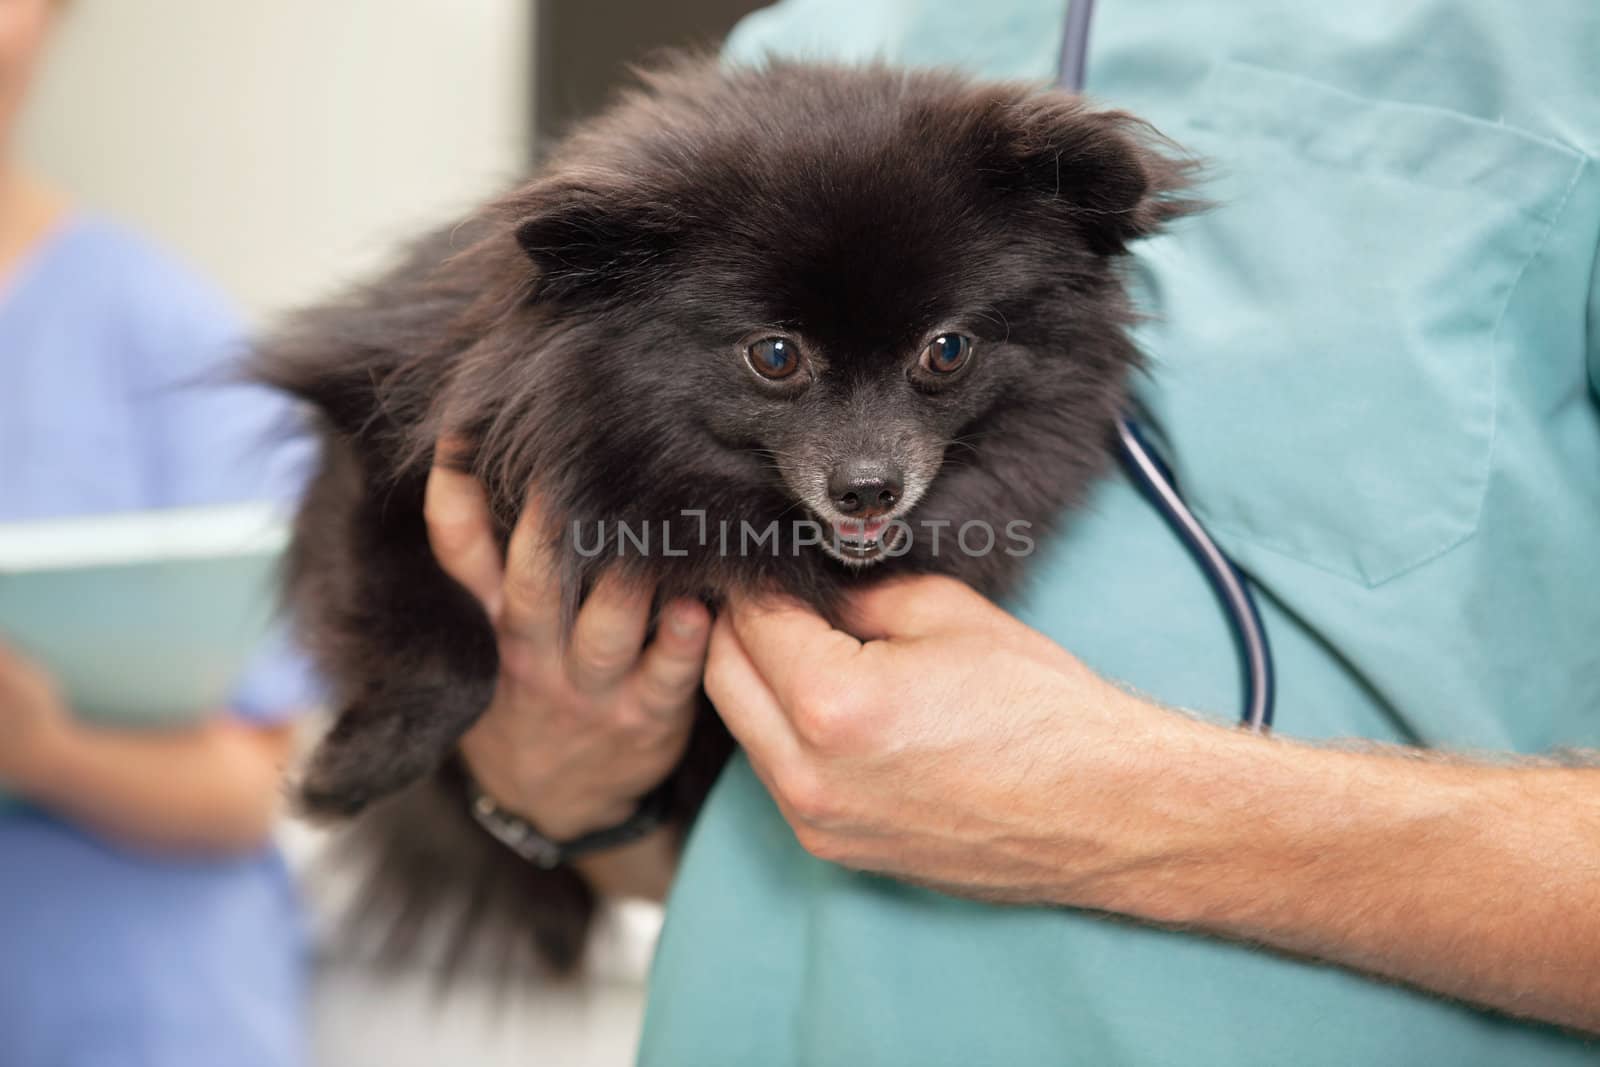 Close-up of veterinarian examining cute little dog